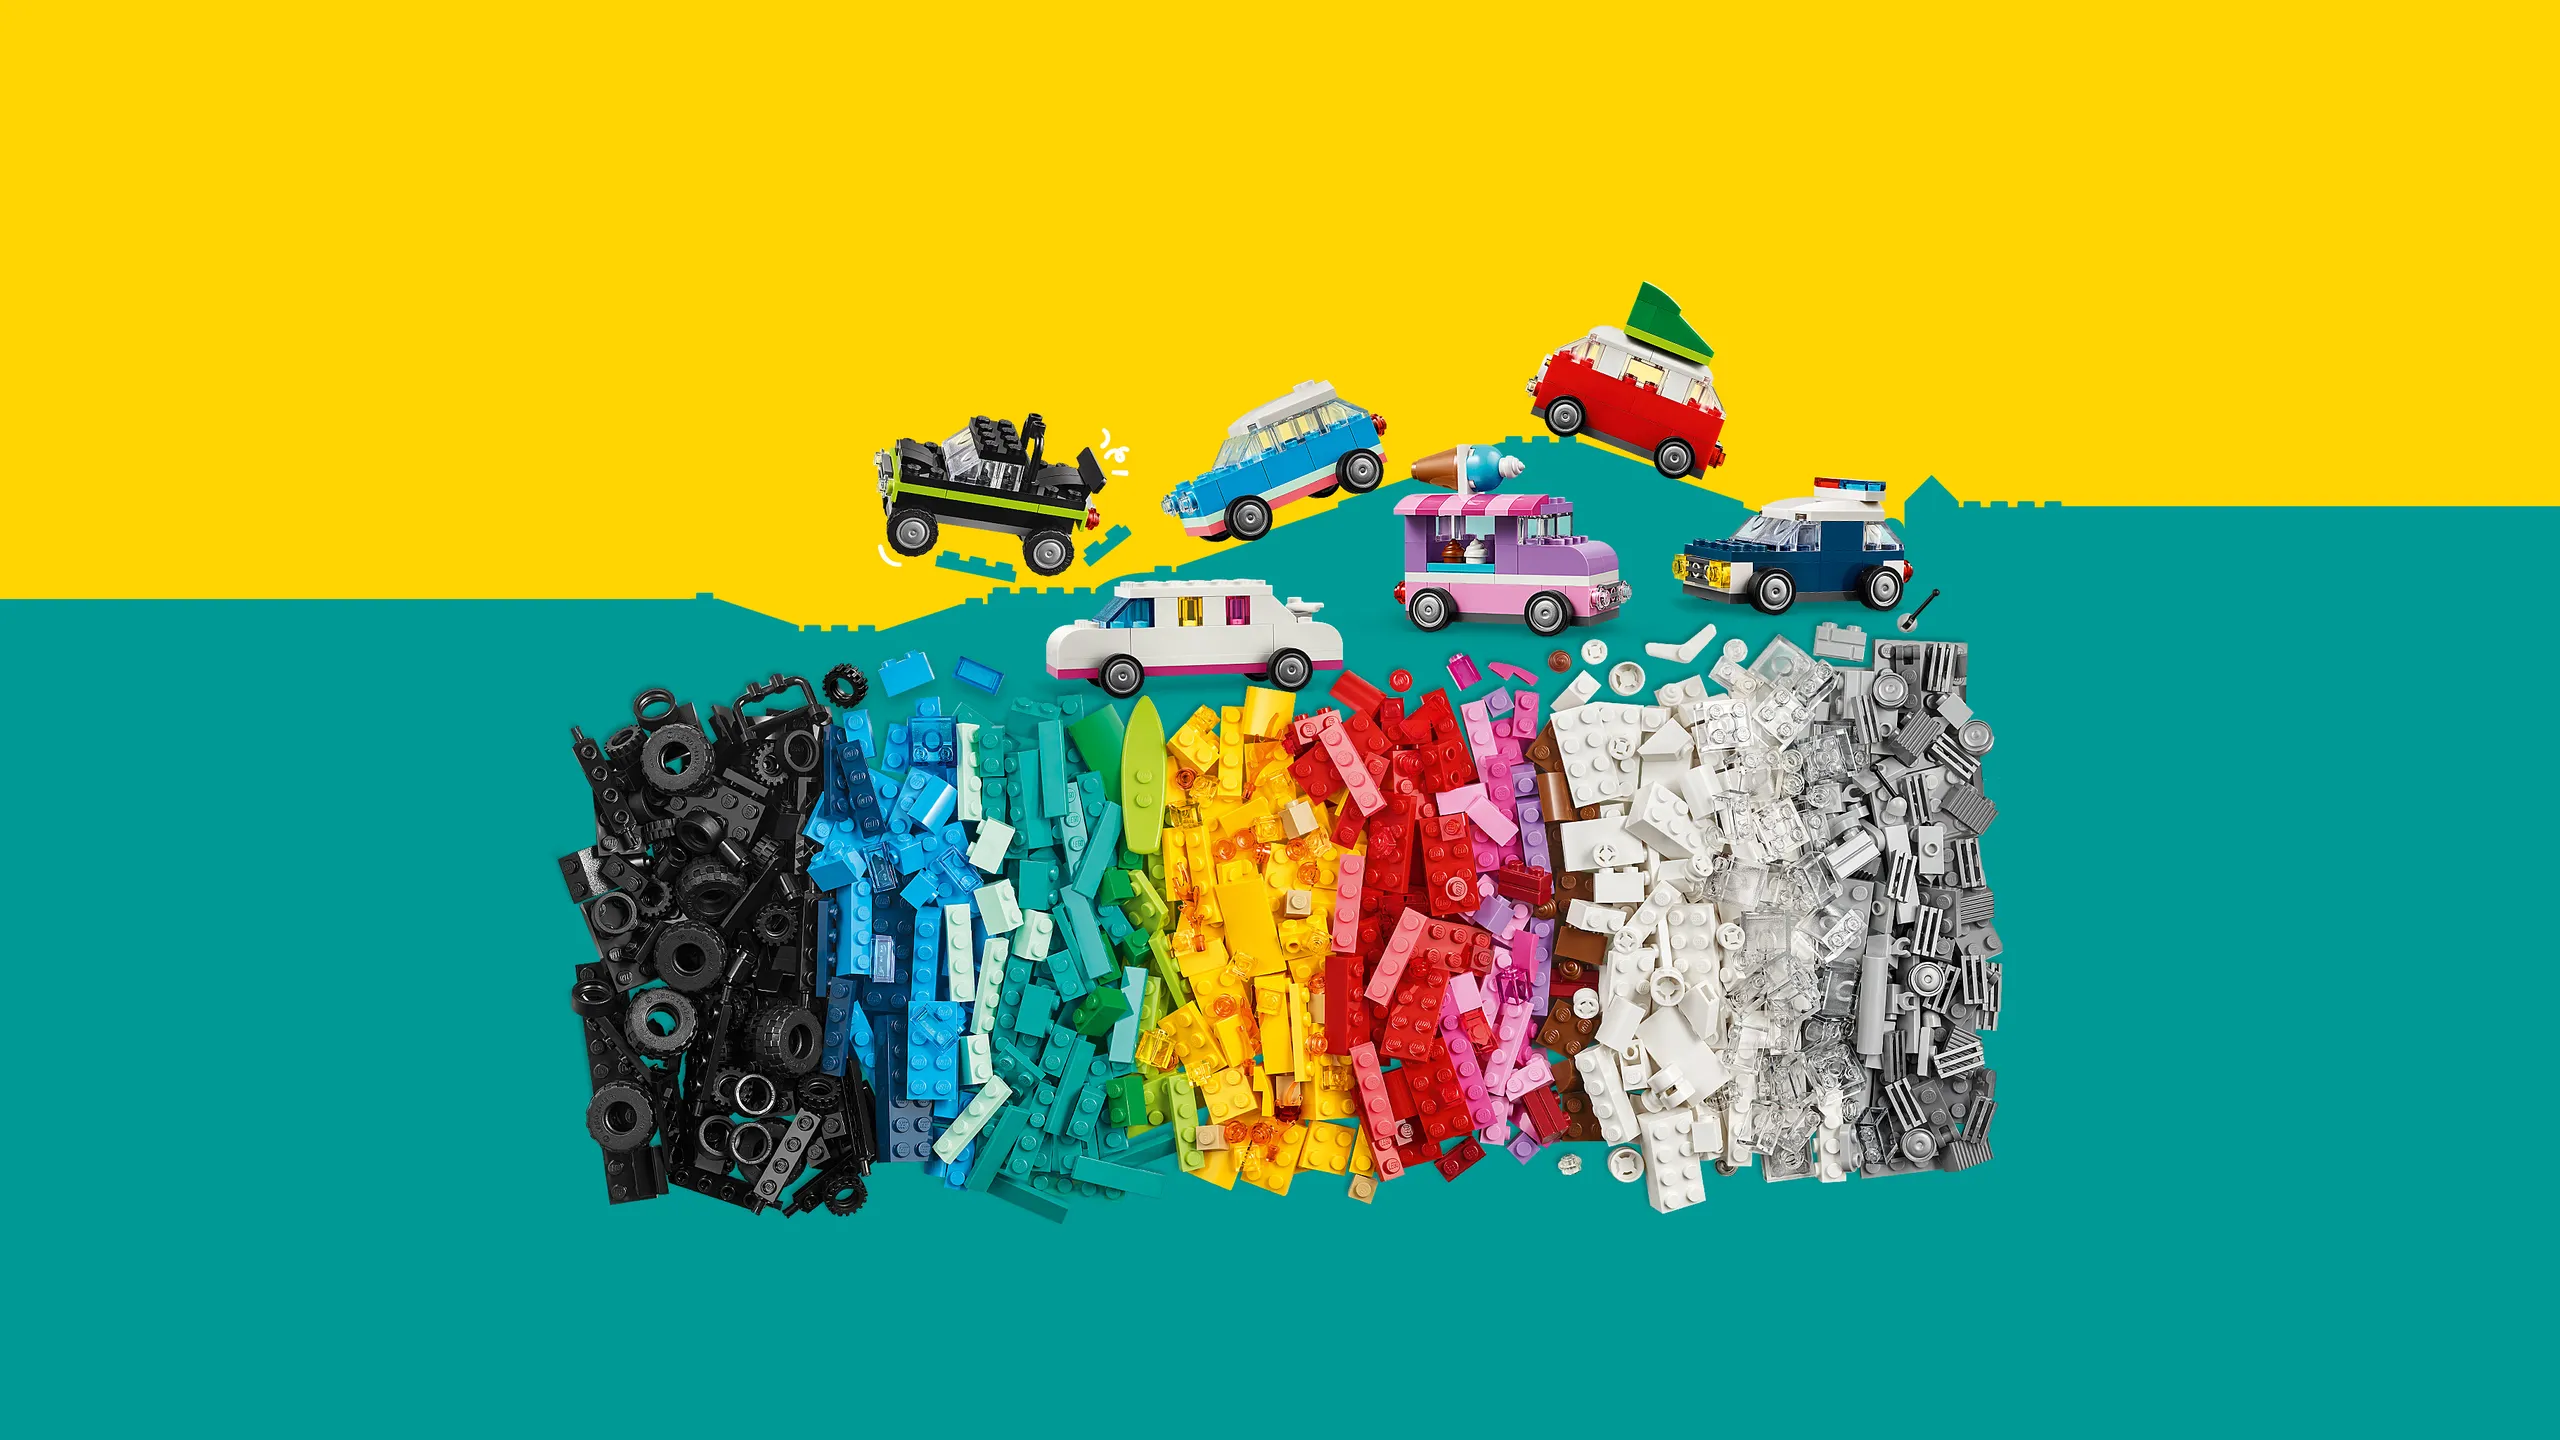 LEGO Classic: Caja Creativa Azul (10706) - Game Zone